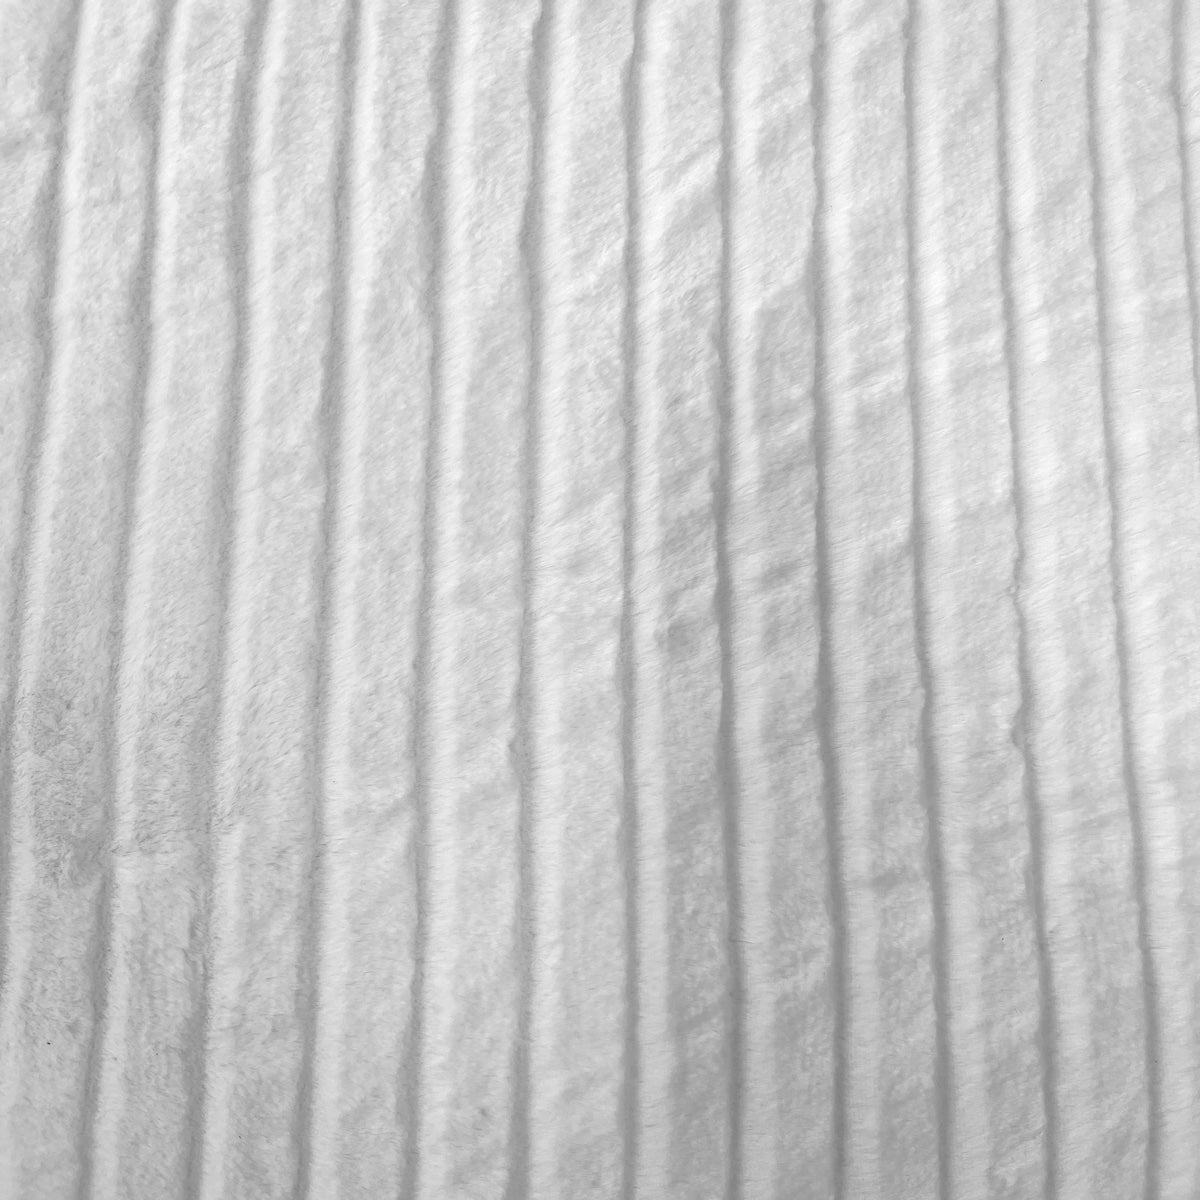 White Striped Rabbit Soft Plush Short Pile Faux Fur Fabric